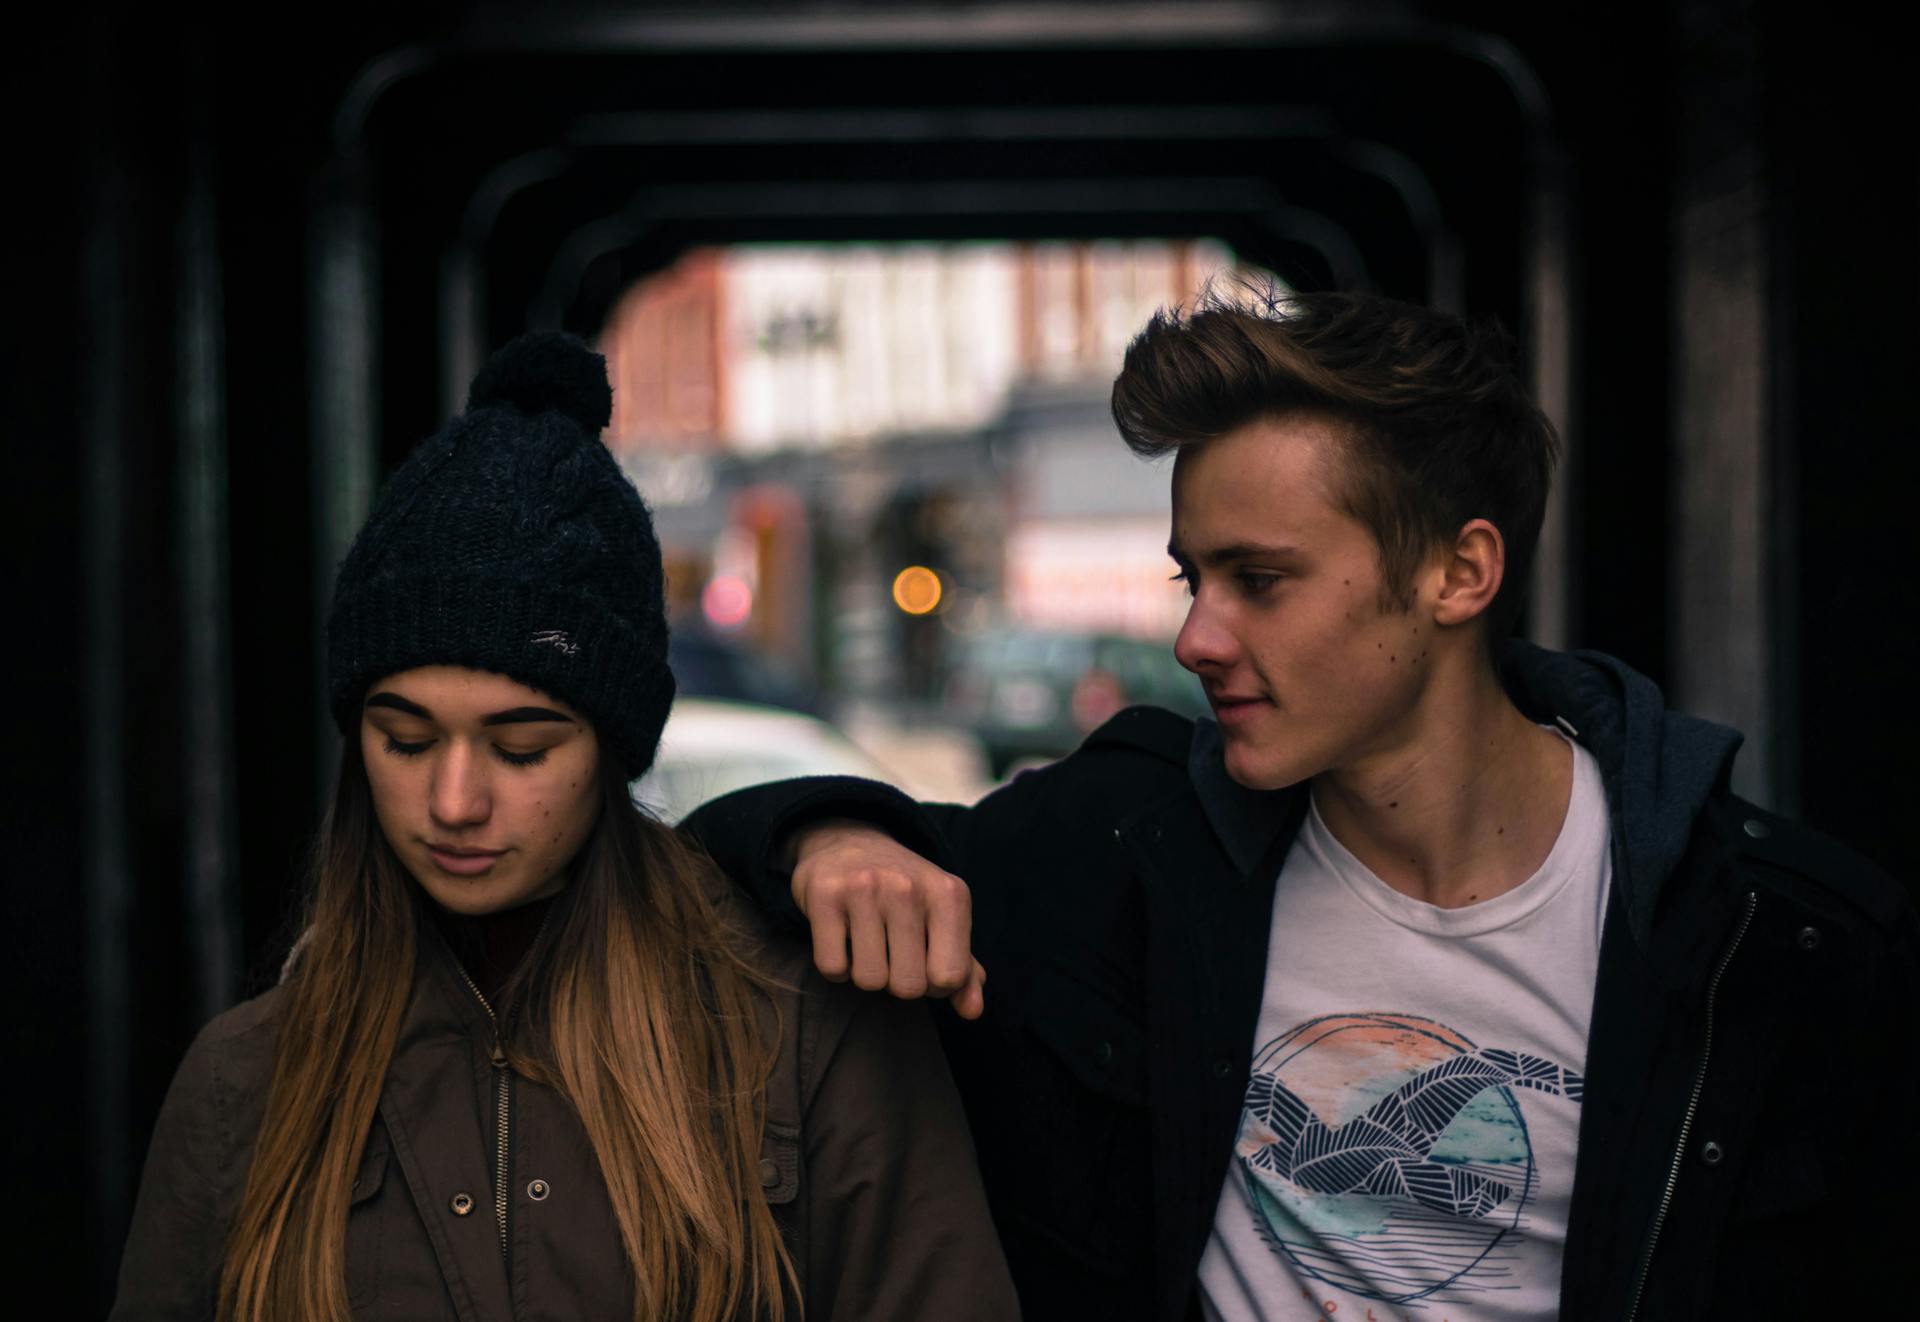 A teenage boy and girl | Source: Pexels